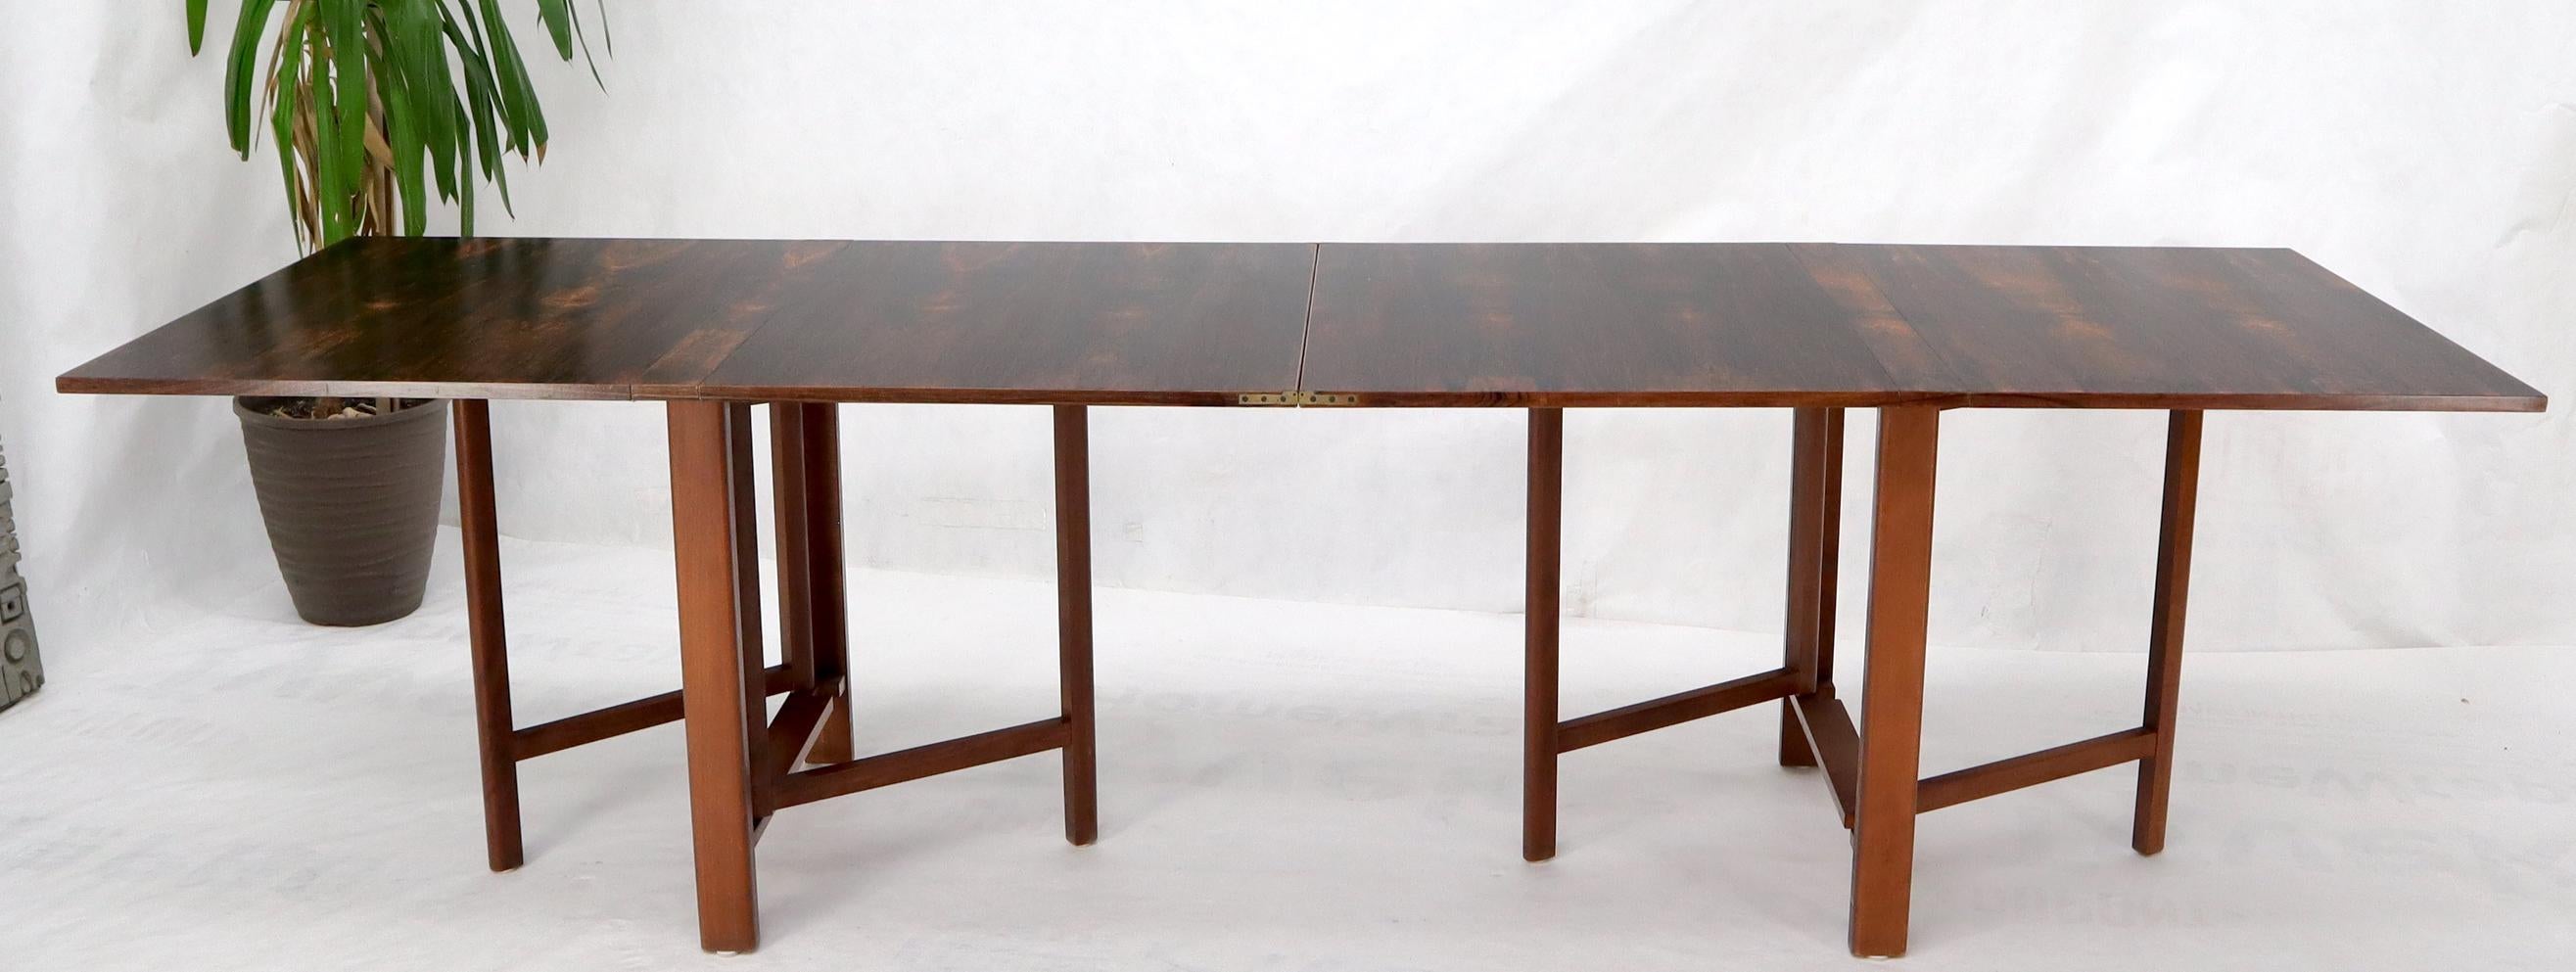 Danish Mid-Century Modern Rosewood Gate Leg Maria Dining Table Bruno Mathsson  For Sale 2